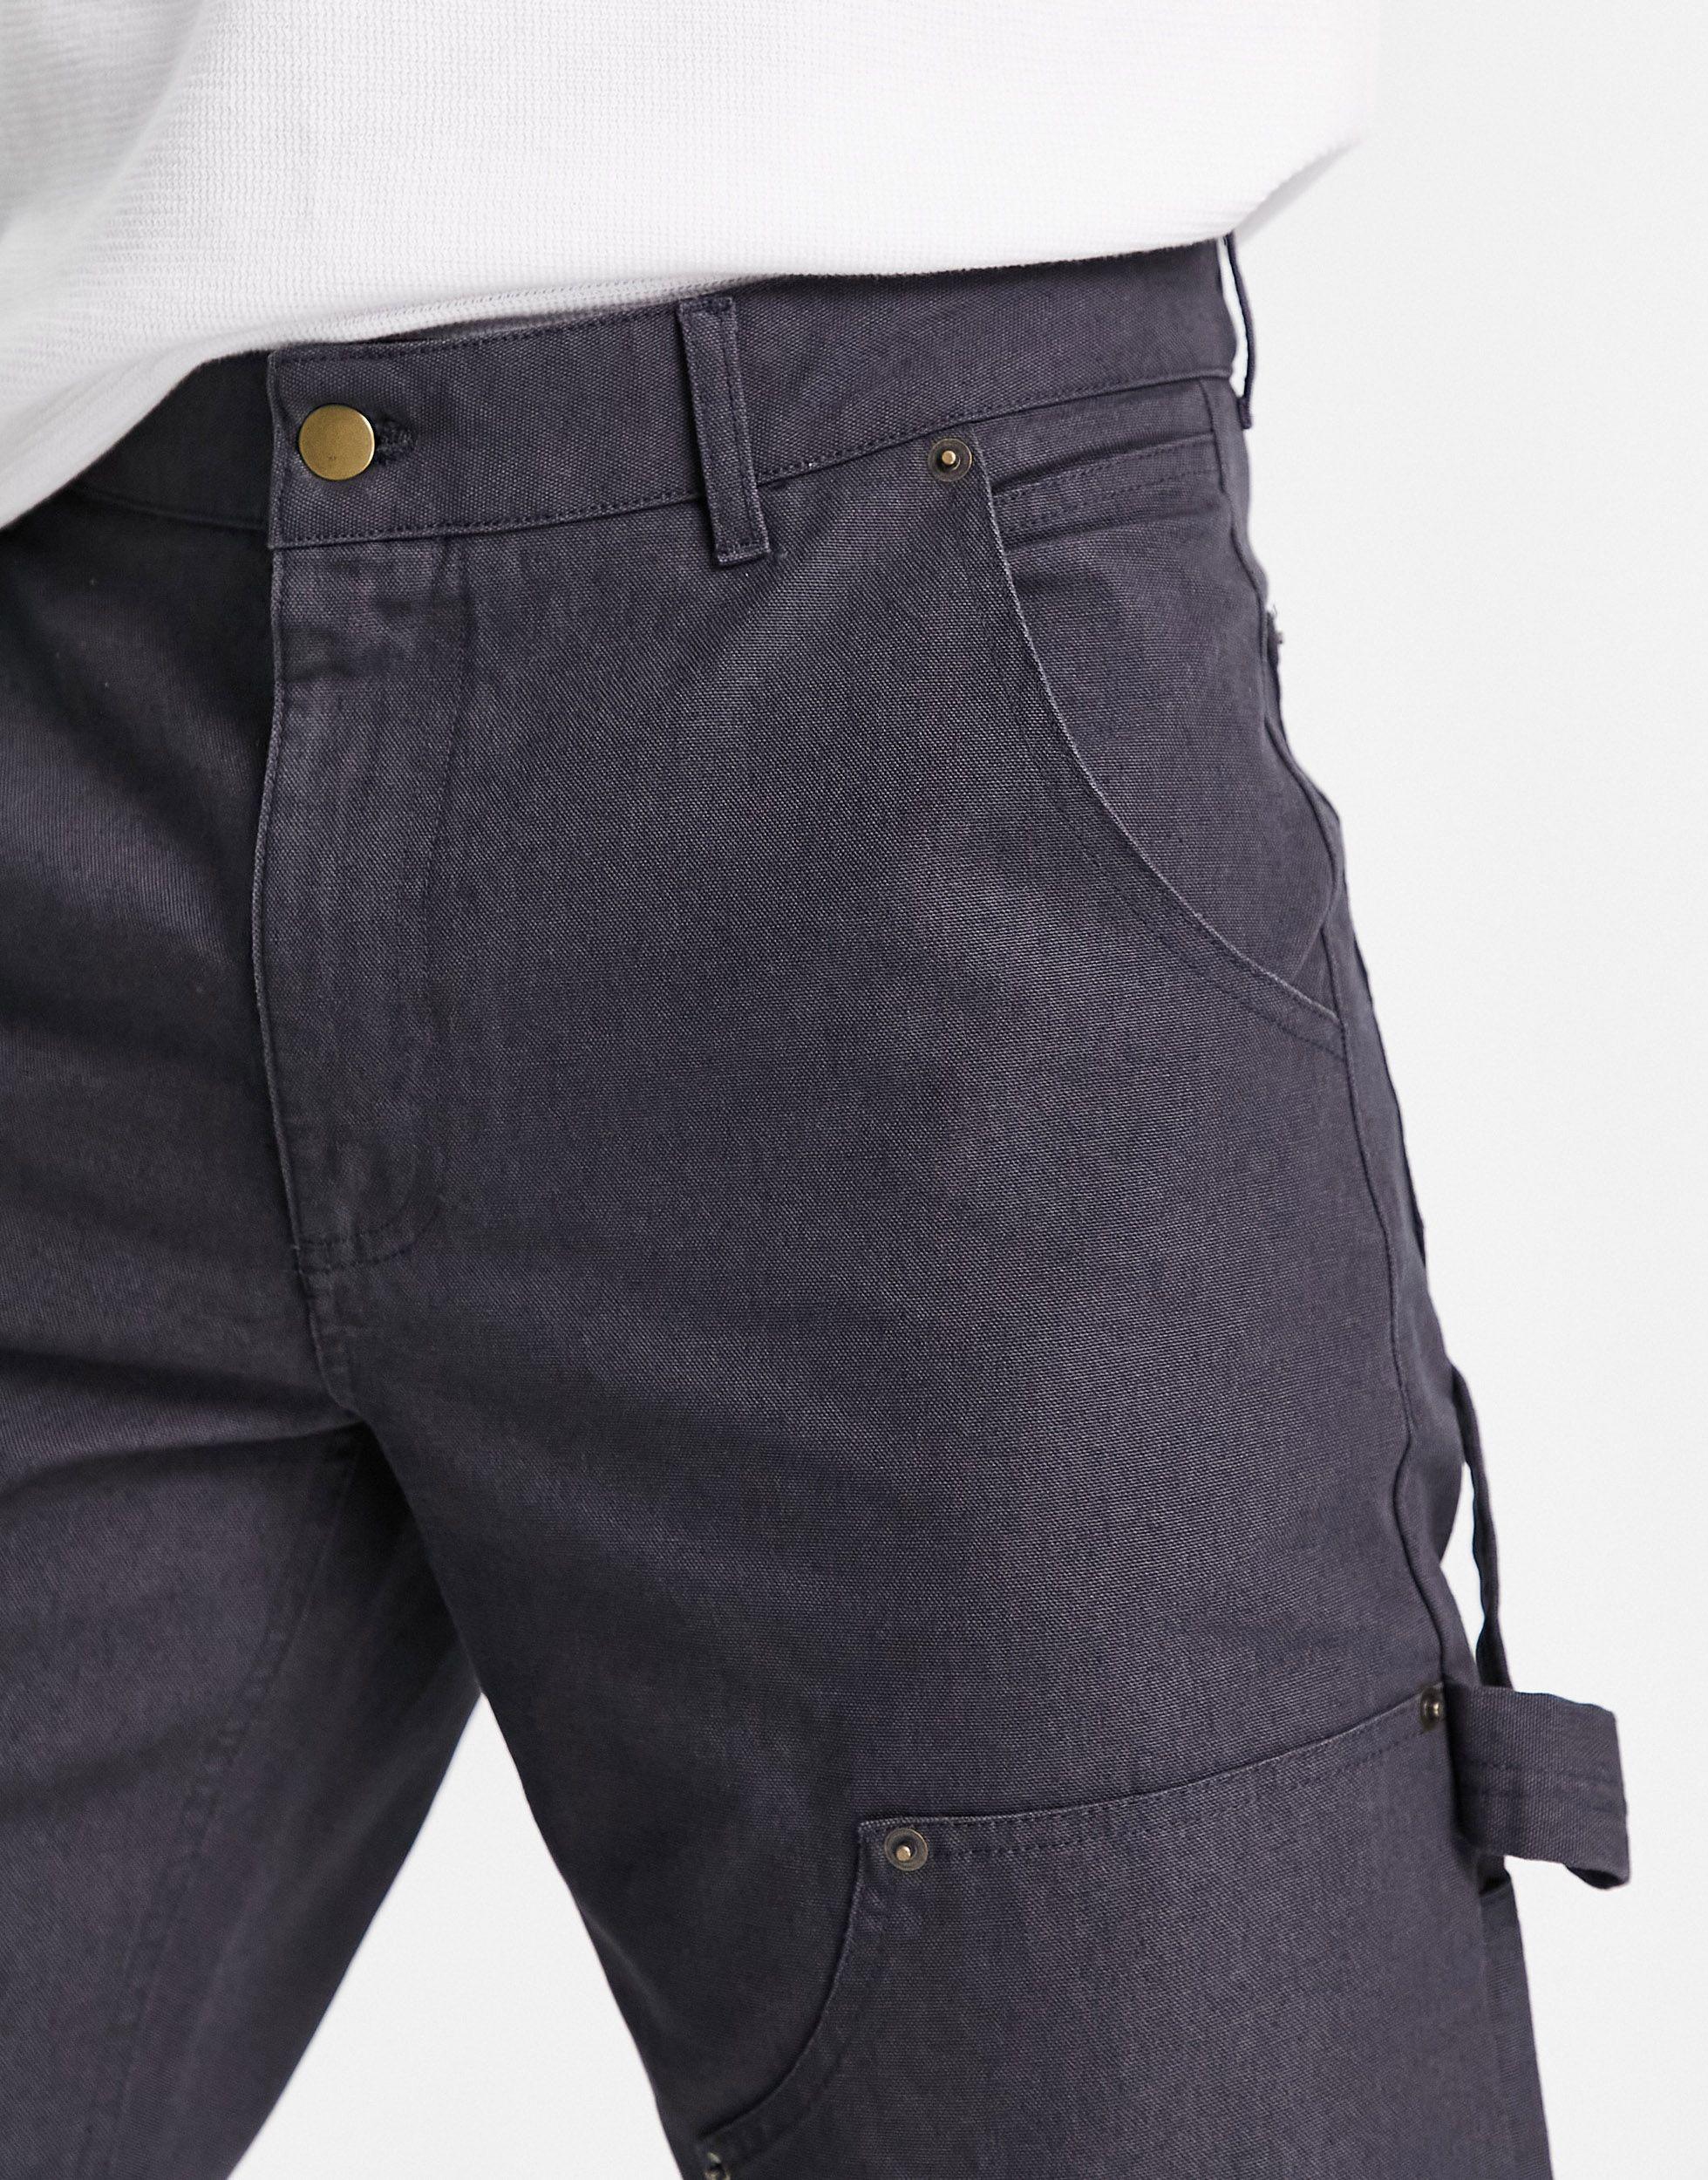 Topman skinny two pocket cargo trousers in khaki | atlaspt.org